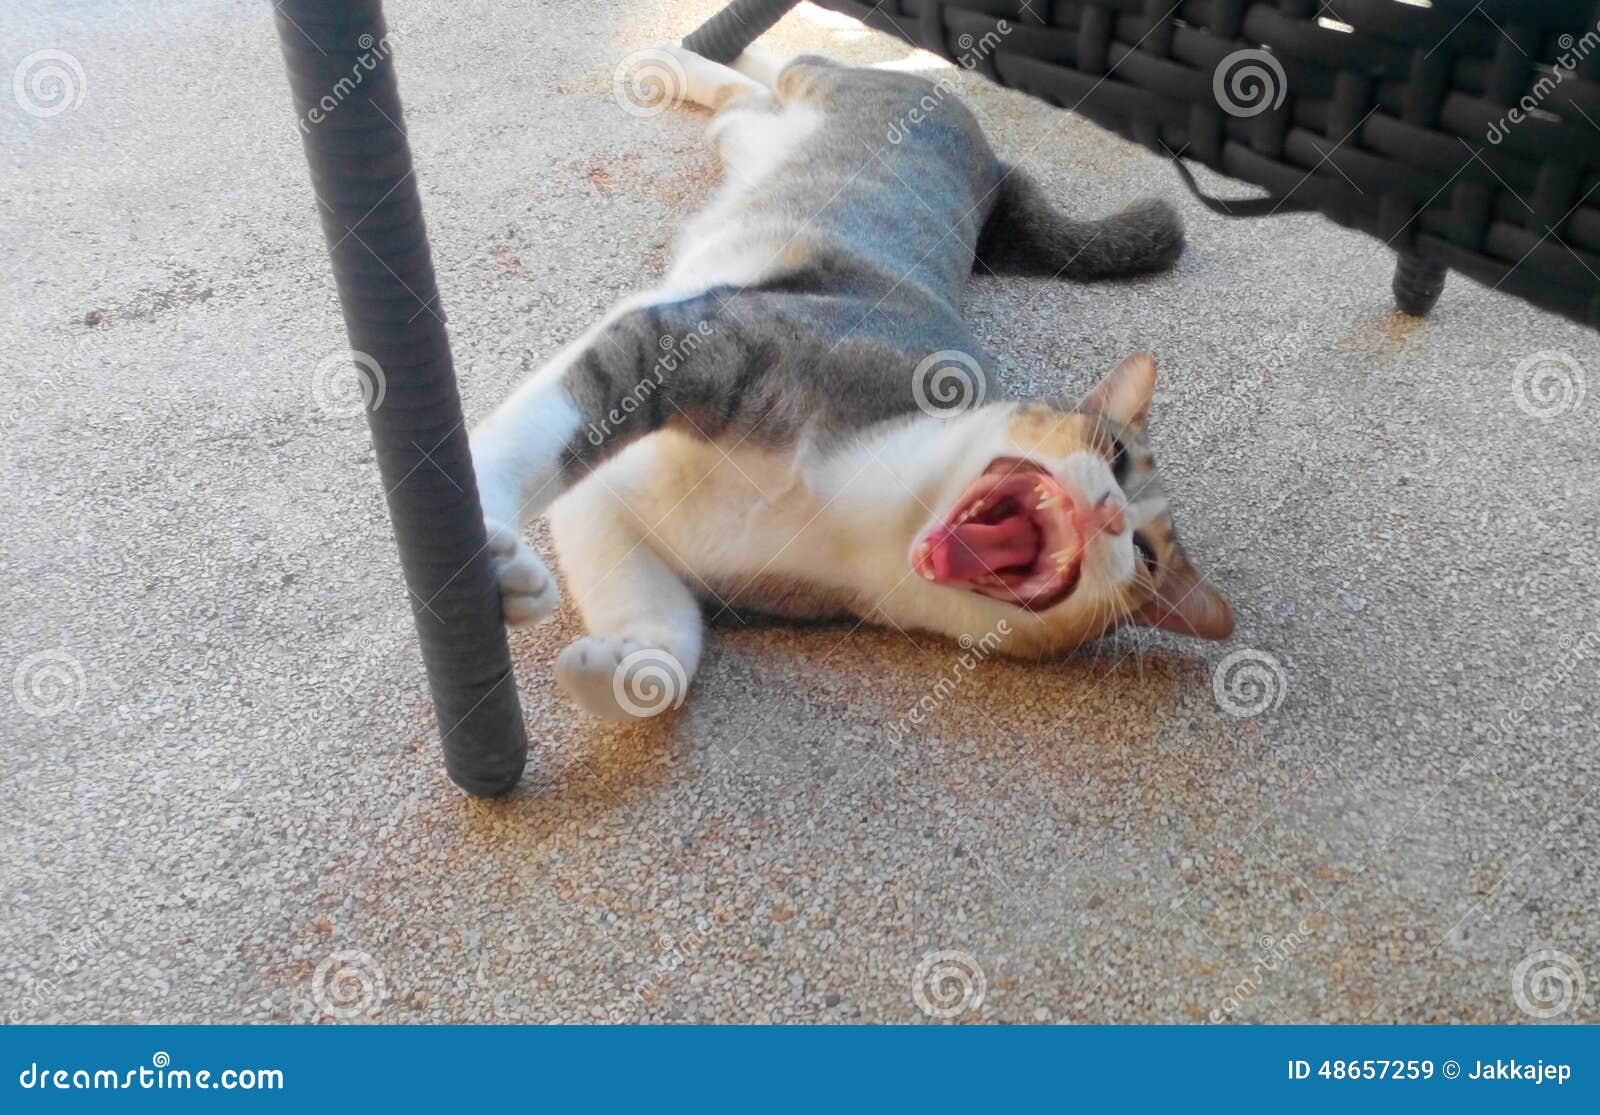 meow meow cutecat yawn